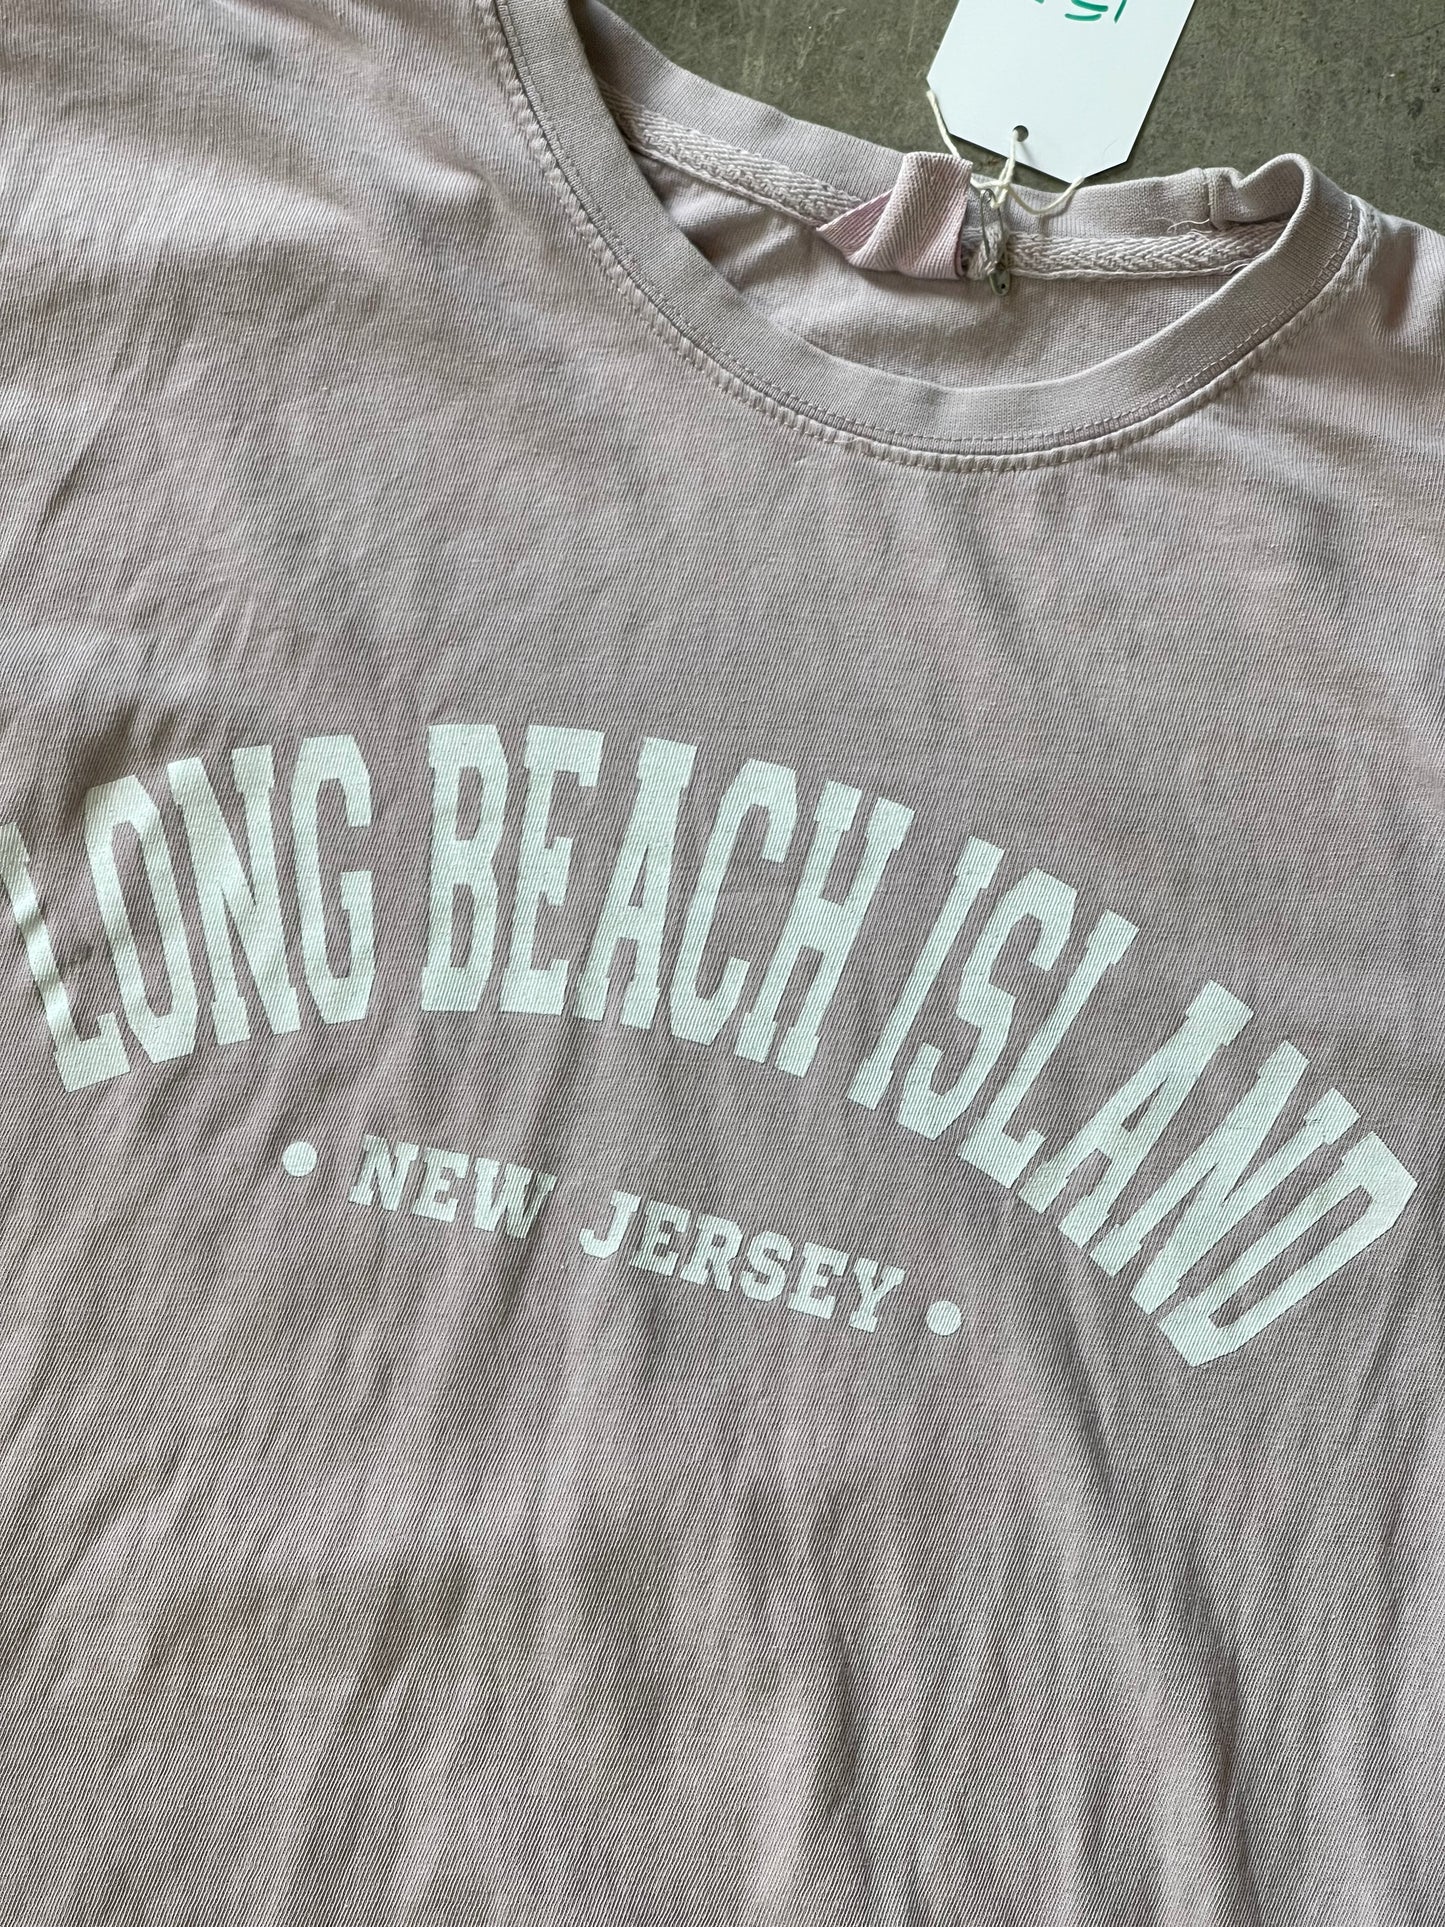 Long Beach Island New Jersey Tee—L